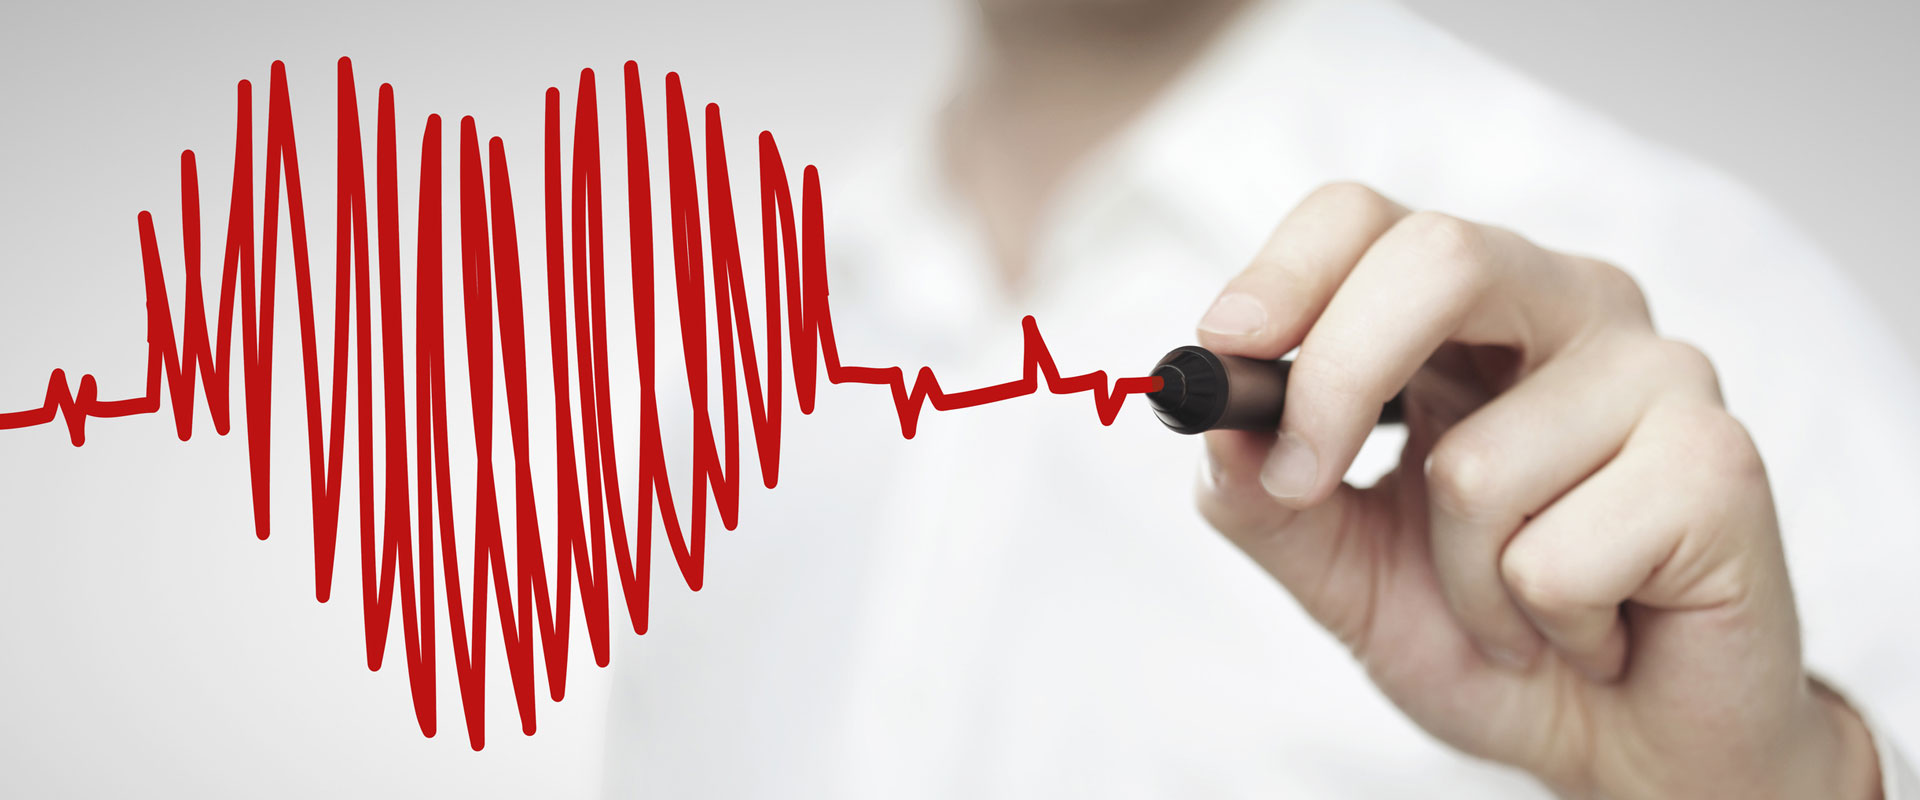 Herzschlag-Kurve in Herzform